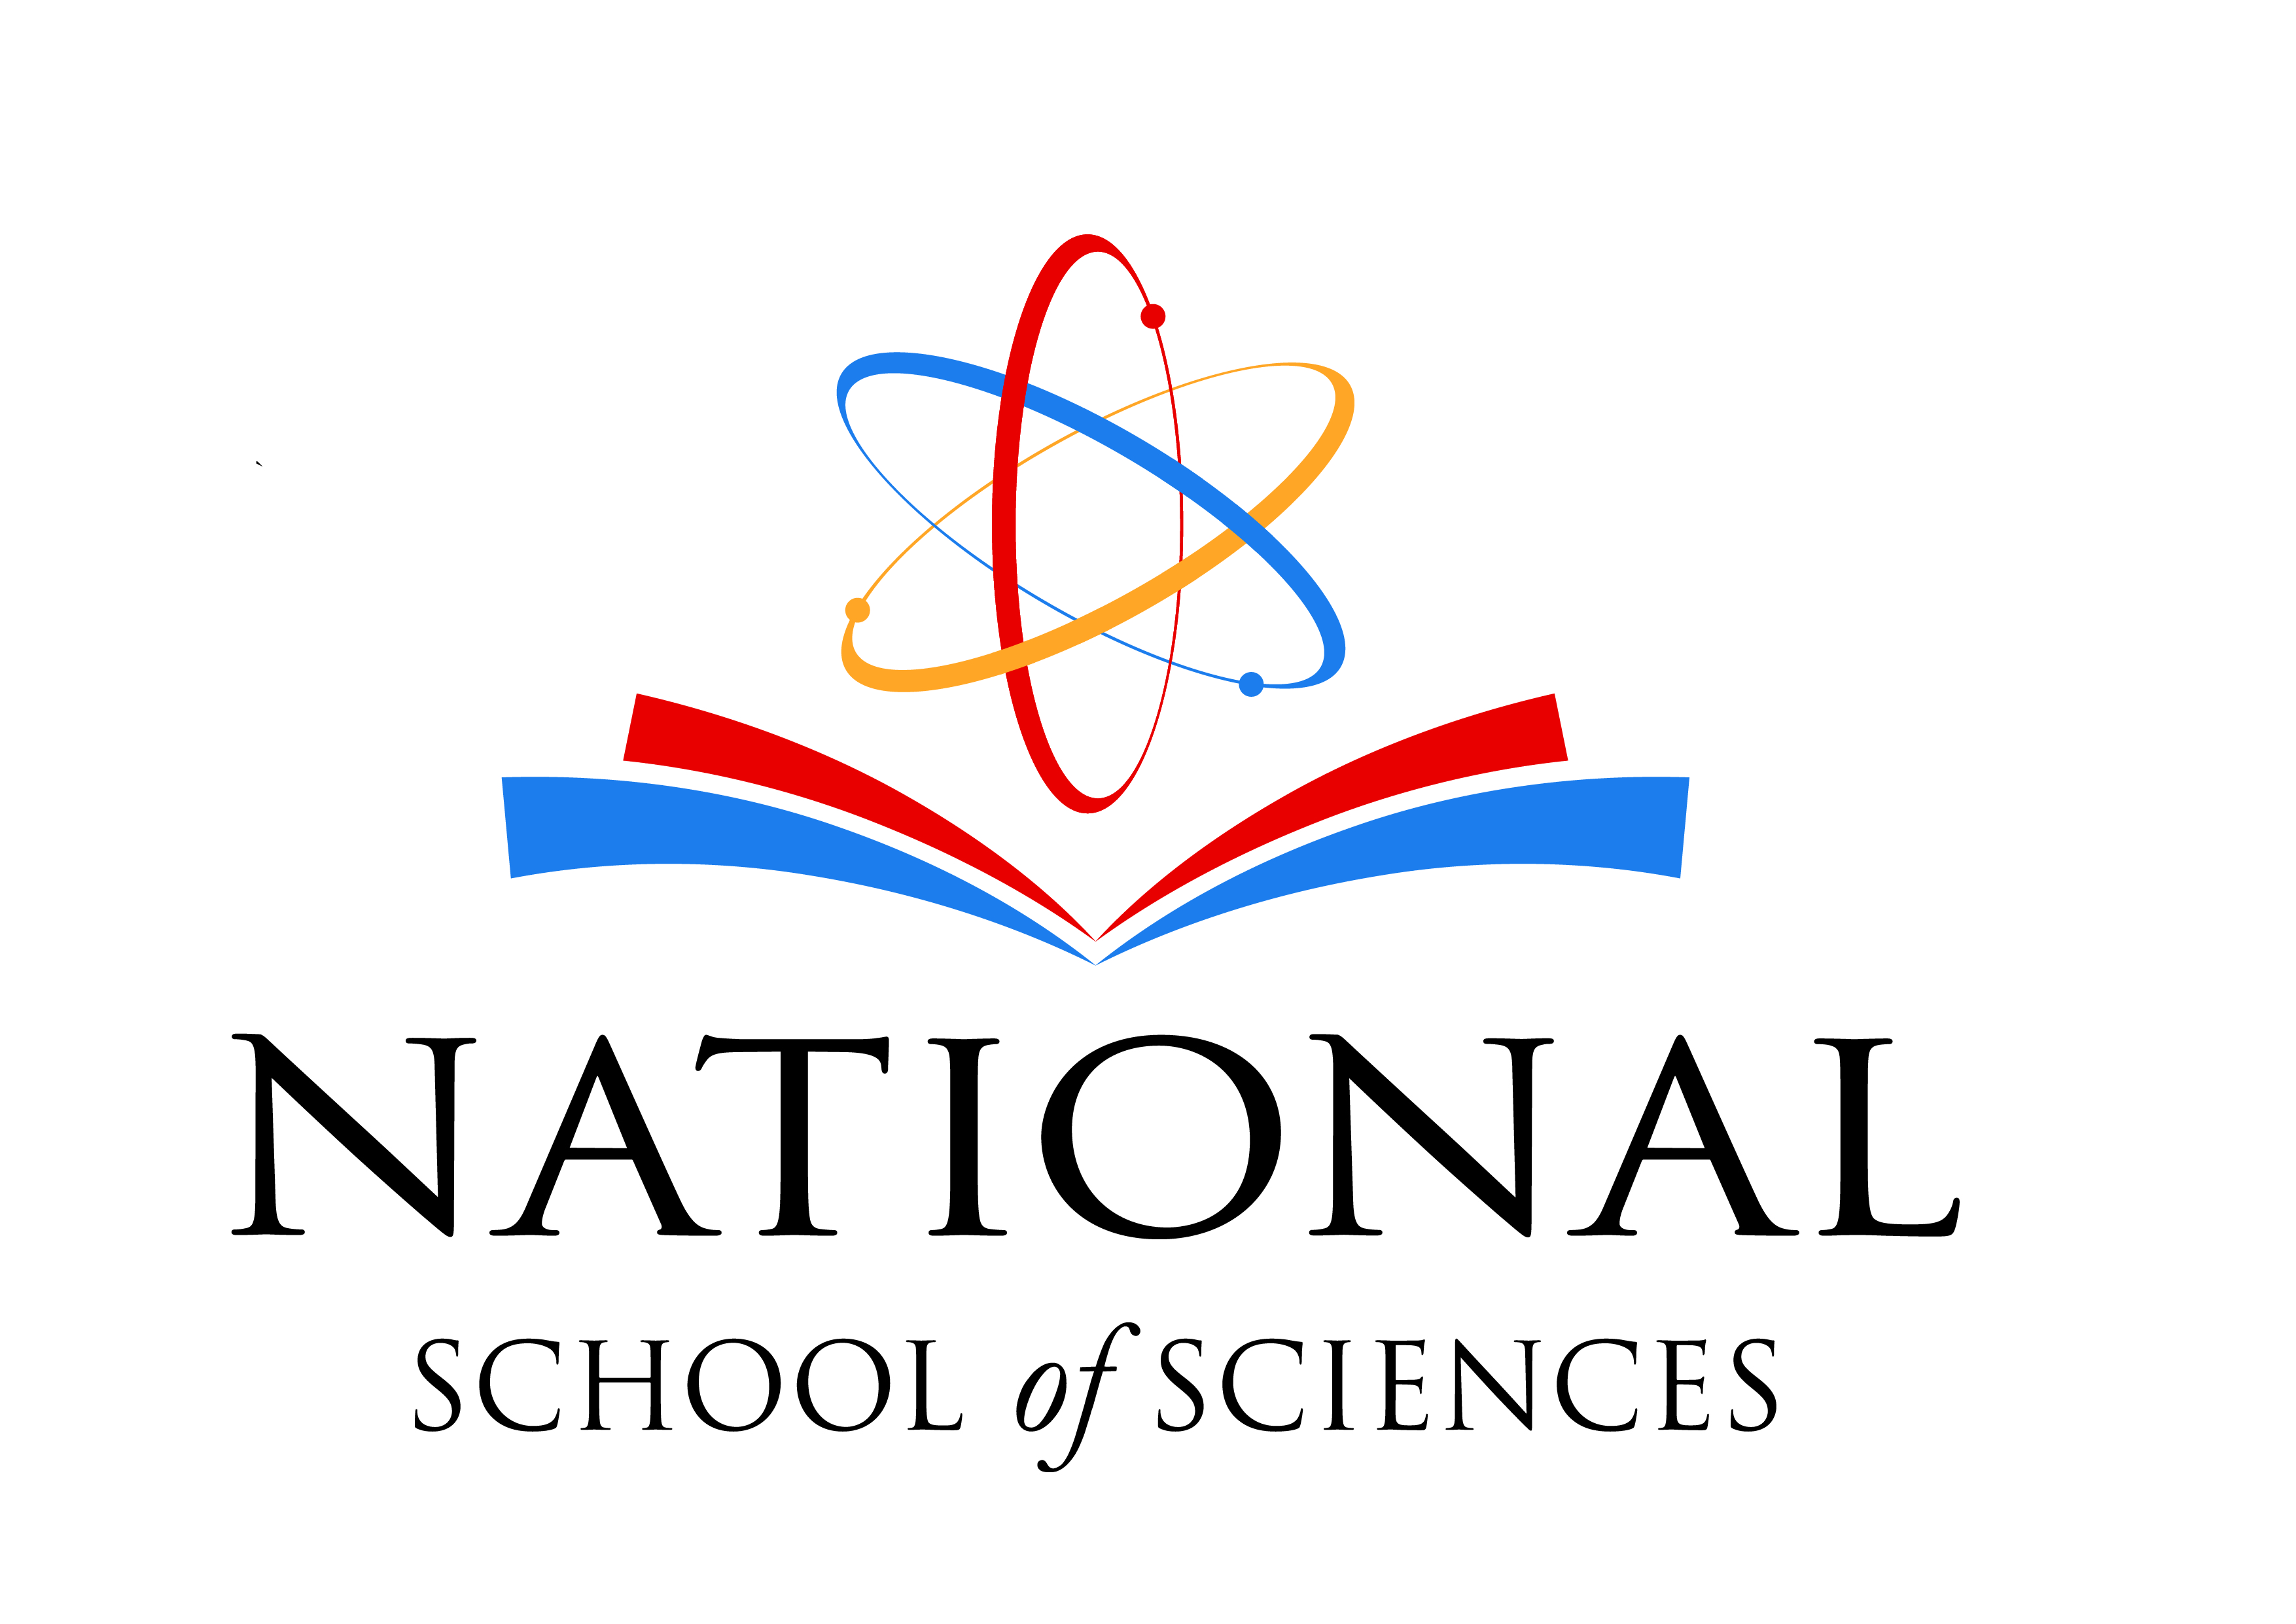 National School of Sciences logo